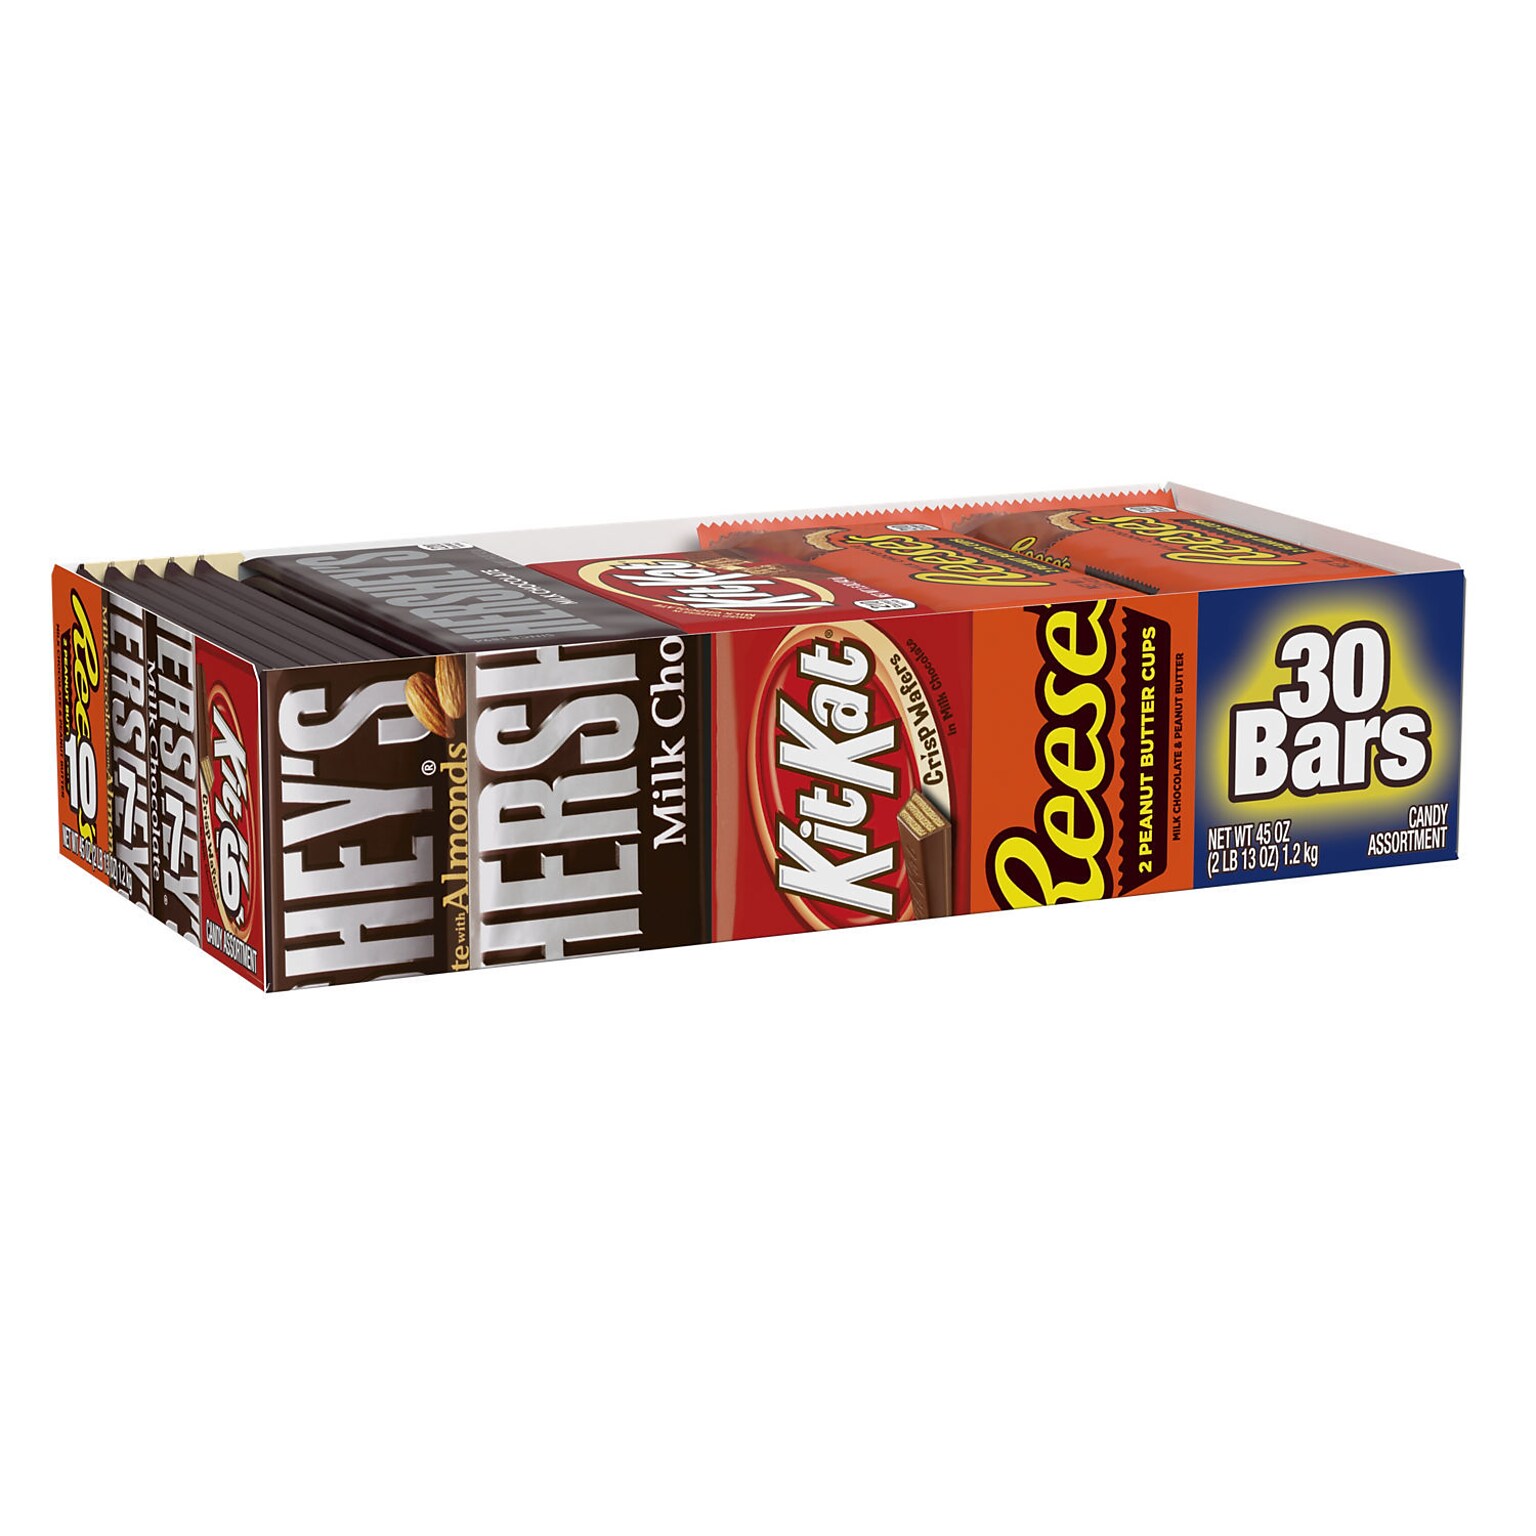 Hersheys, Kit Kat and Reeses Assorted Milk Chocolate Candy Bars, 45 oz (HEC20650)